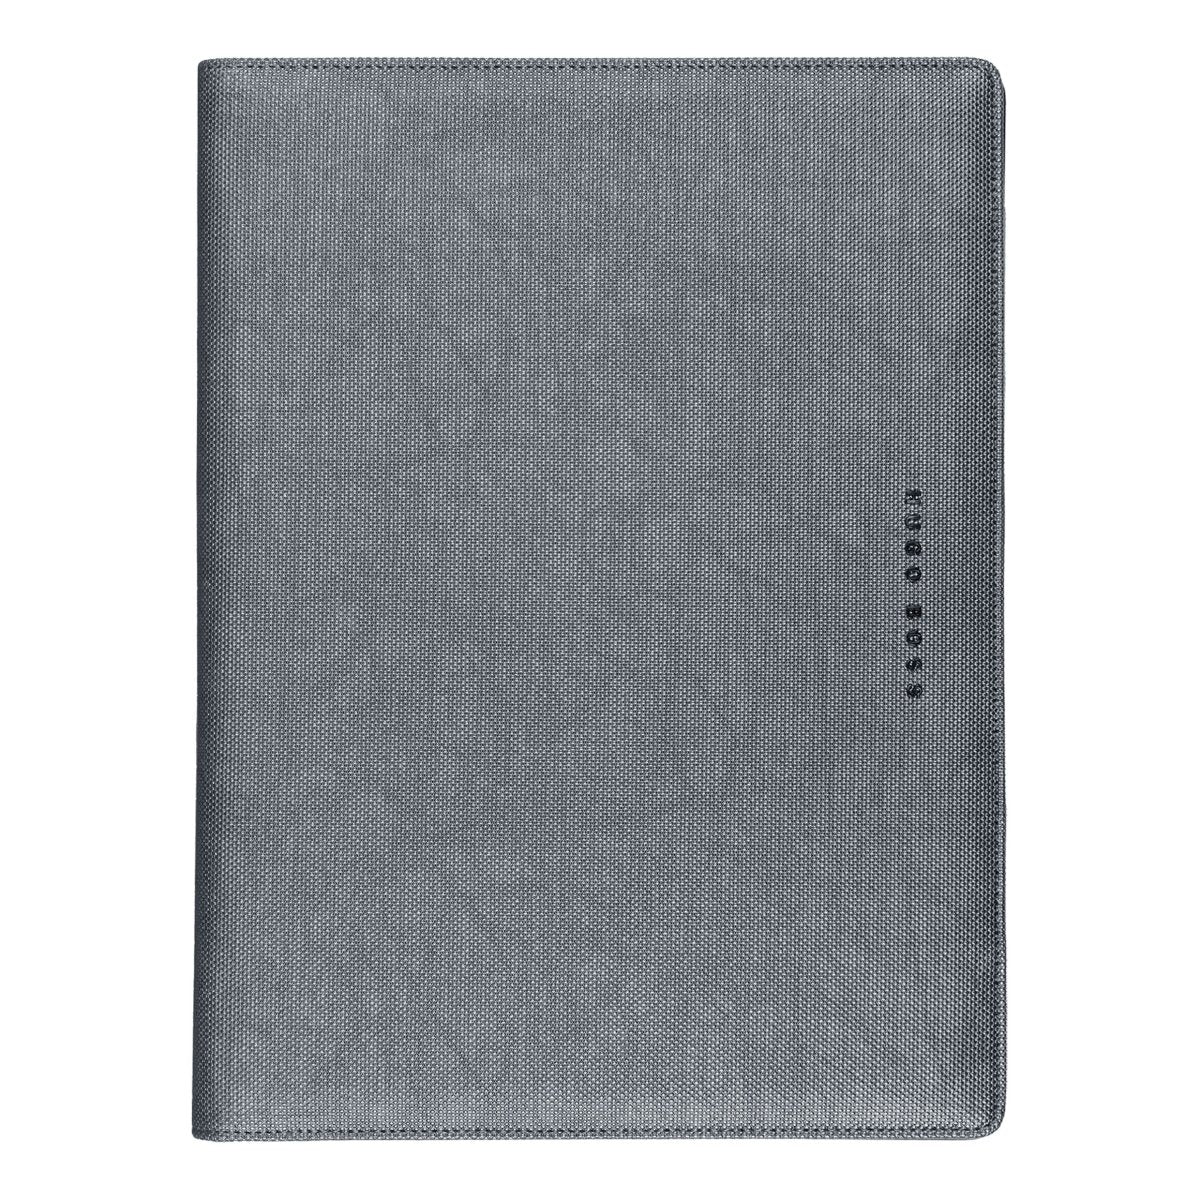 HUGO BOSS HDF105J Ντοσιέ A4 Gleam Dark Grey Folder - Κοσμηματοπωλείο Goldy